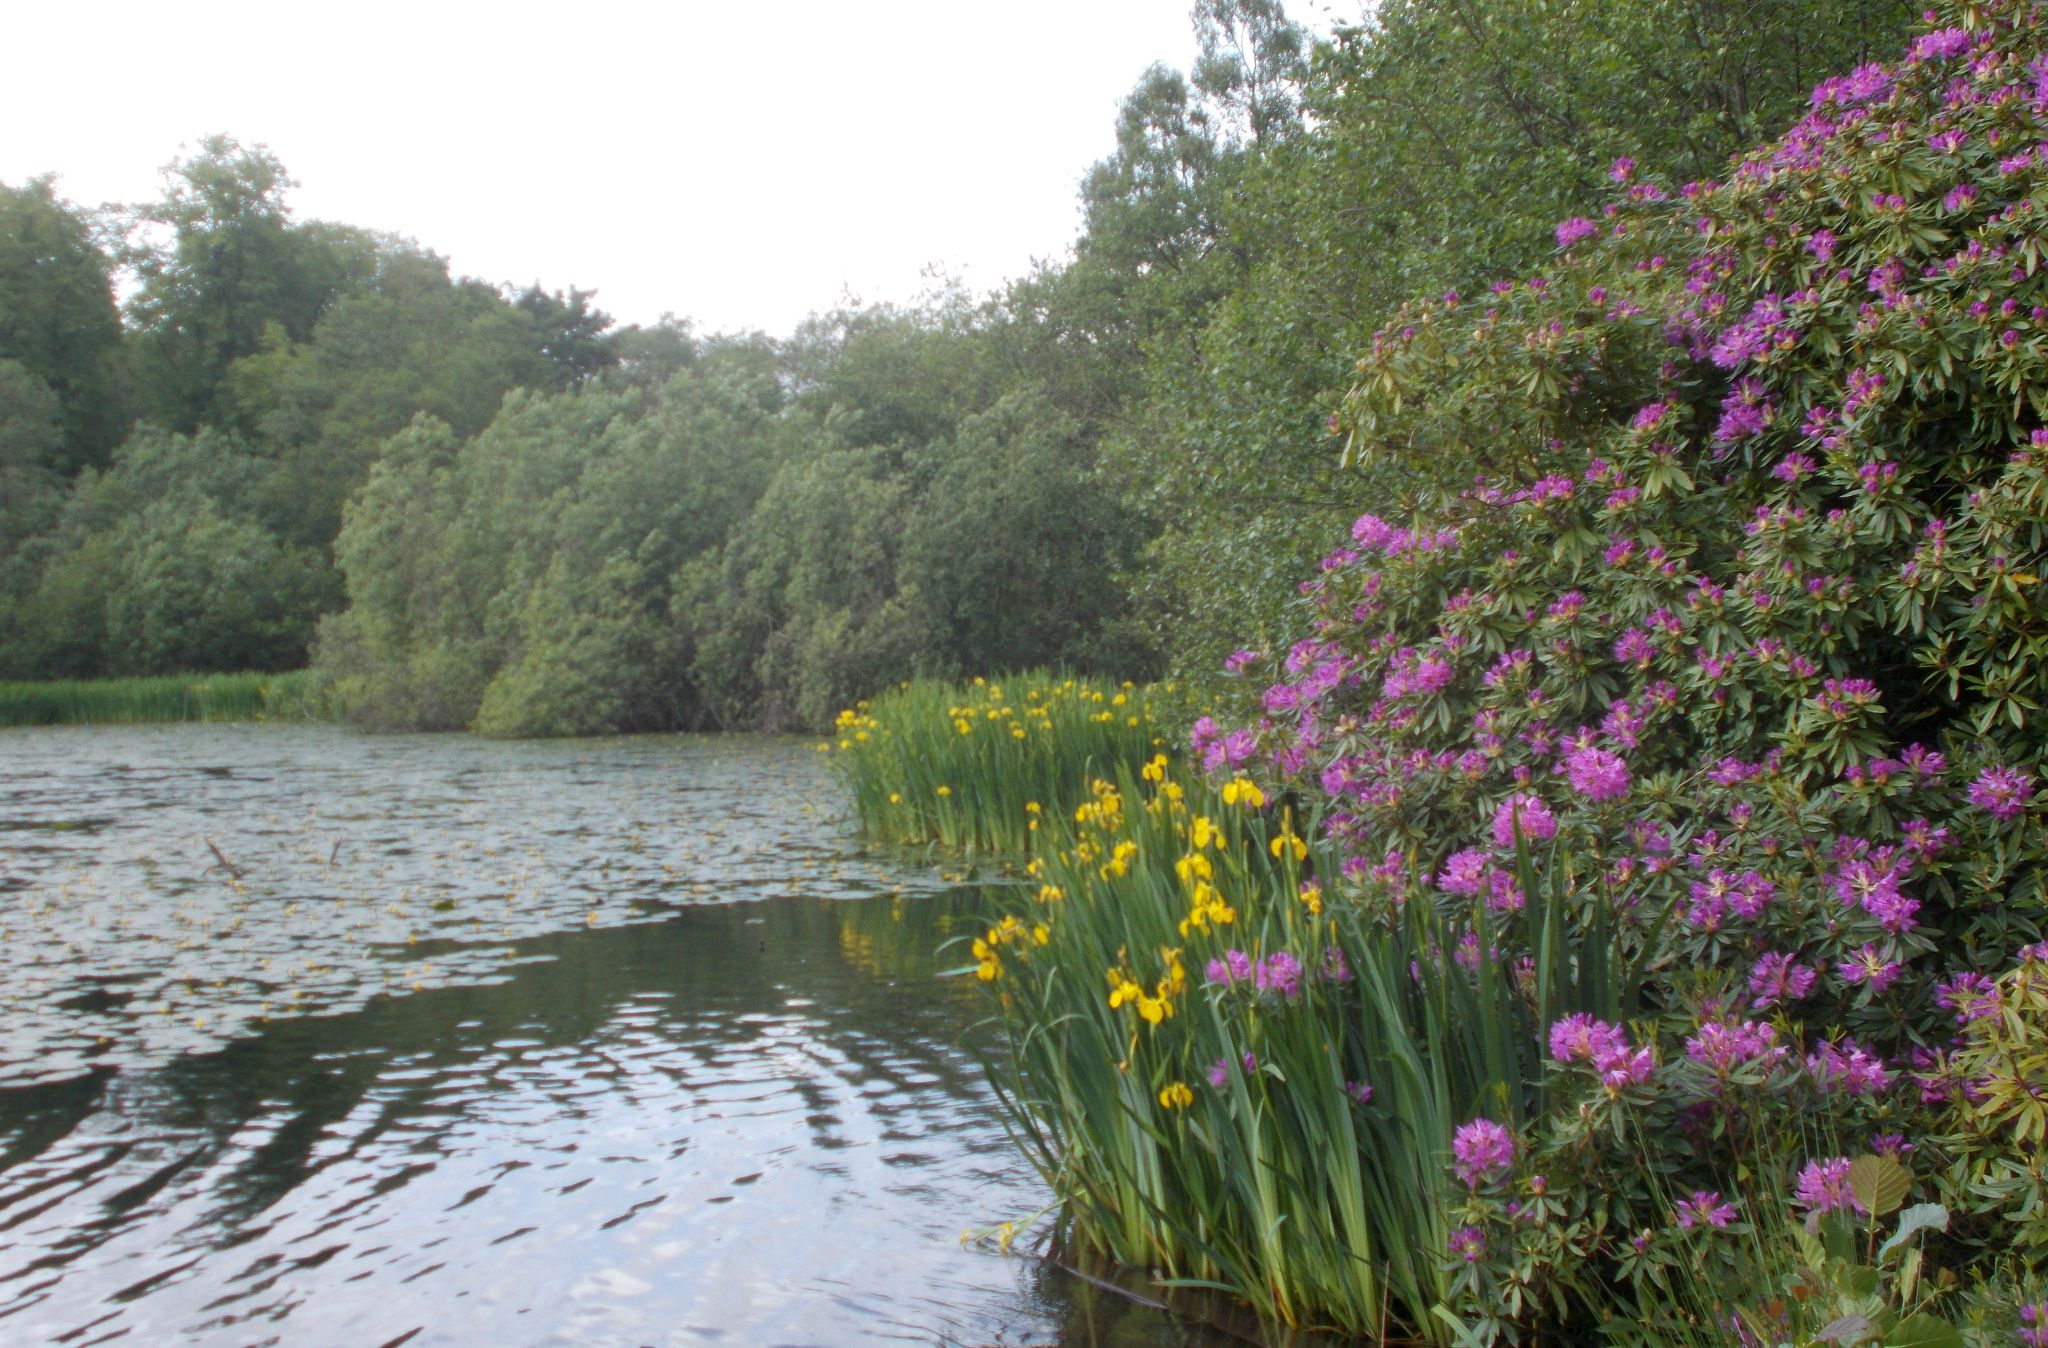 Iris and Rhododendrons at Kilmardinny Loch in Bearsden